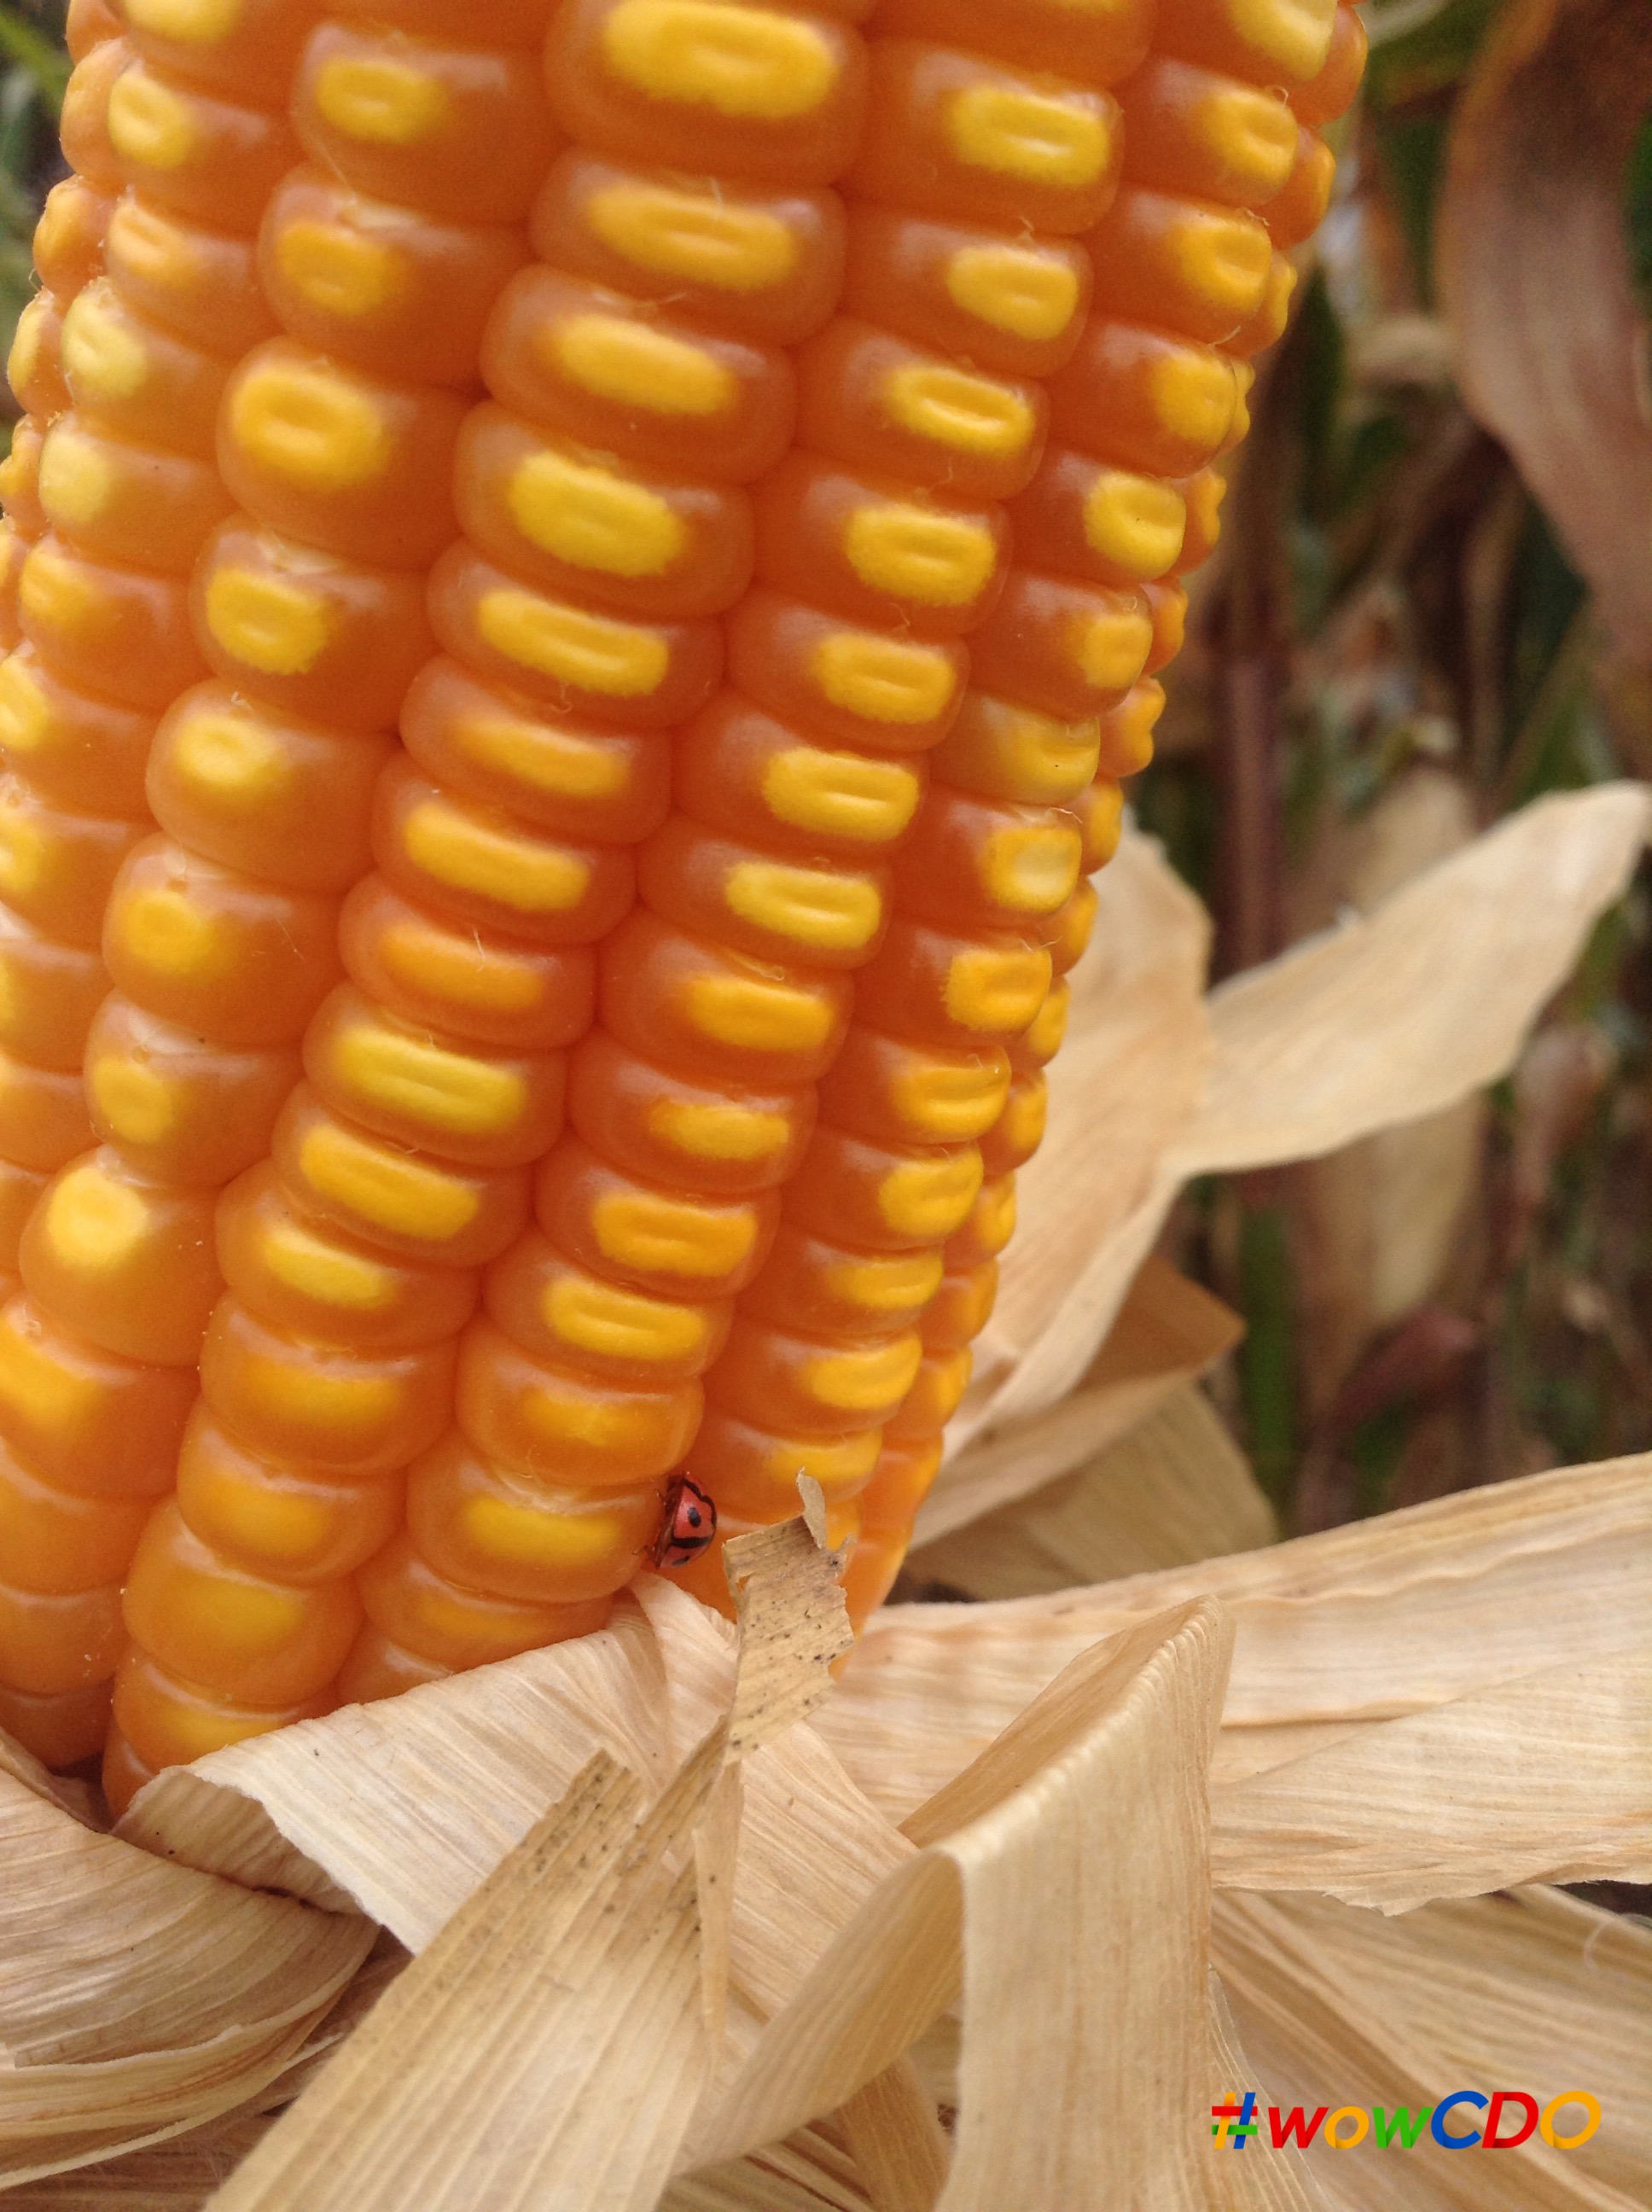 INTERESTING: A “Super” Corn Seed That Change Lives